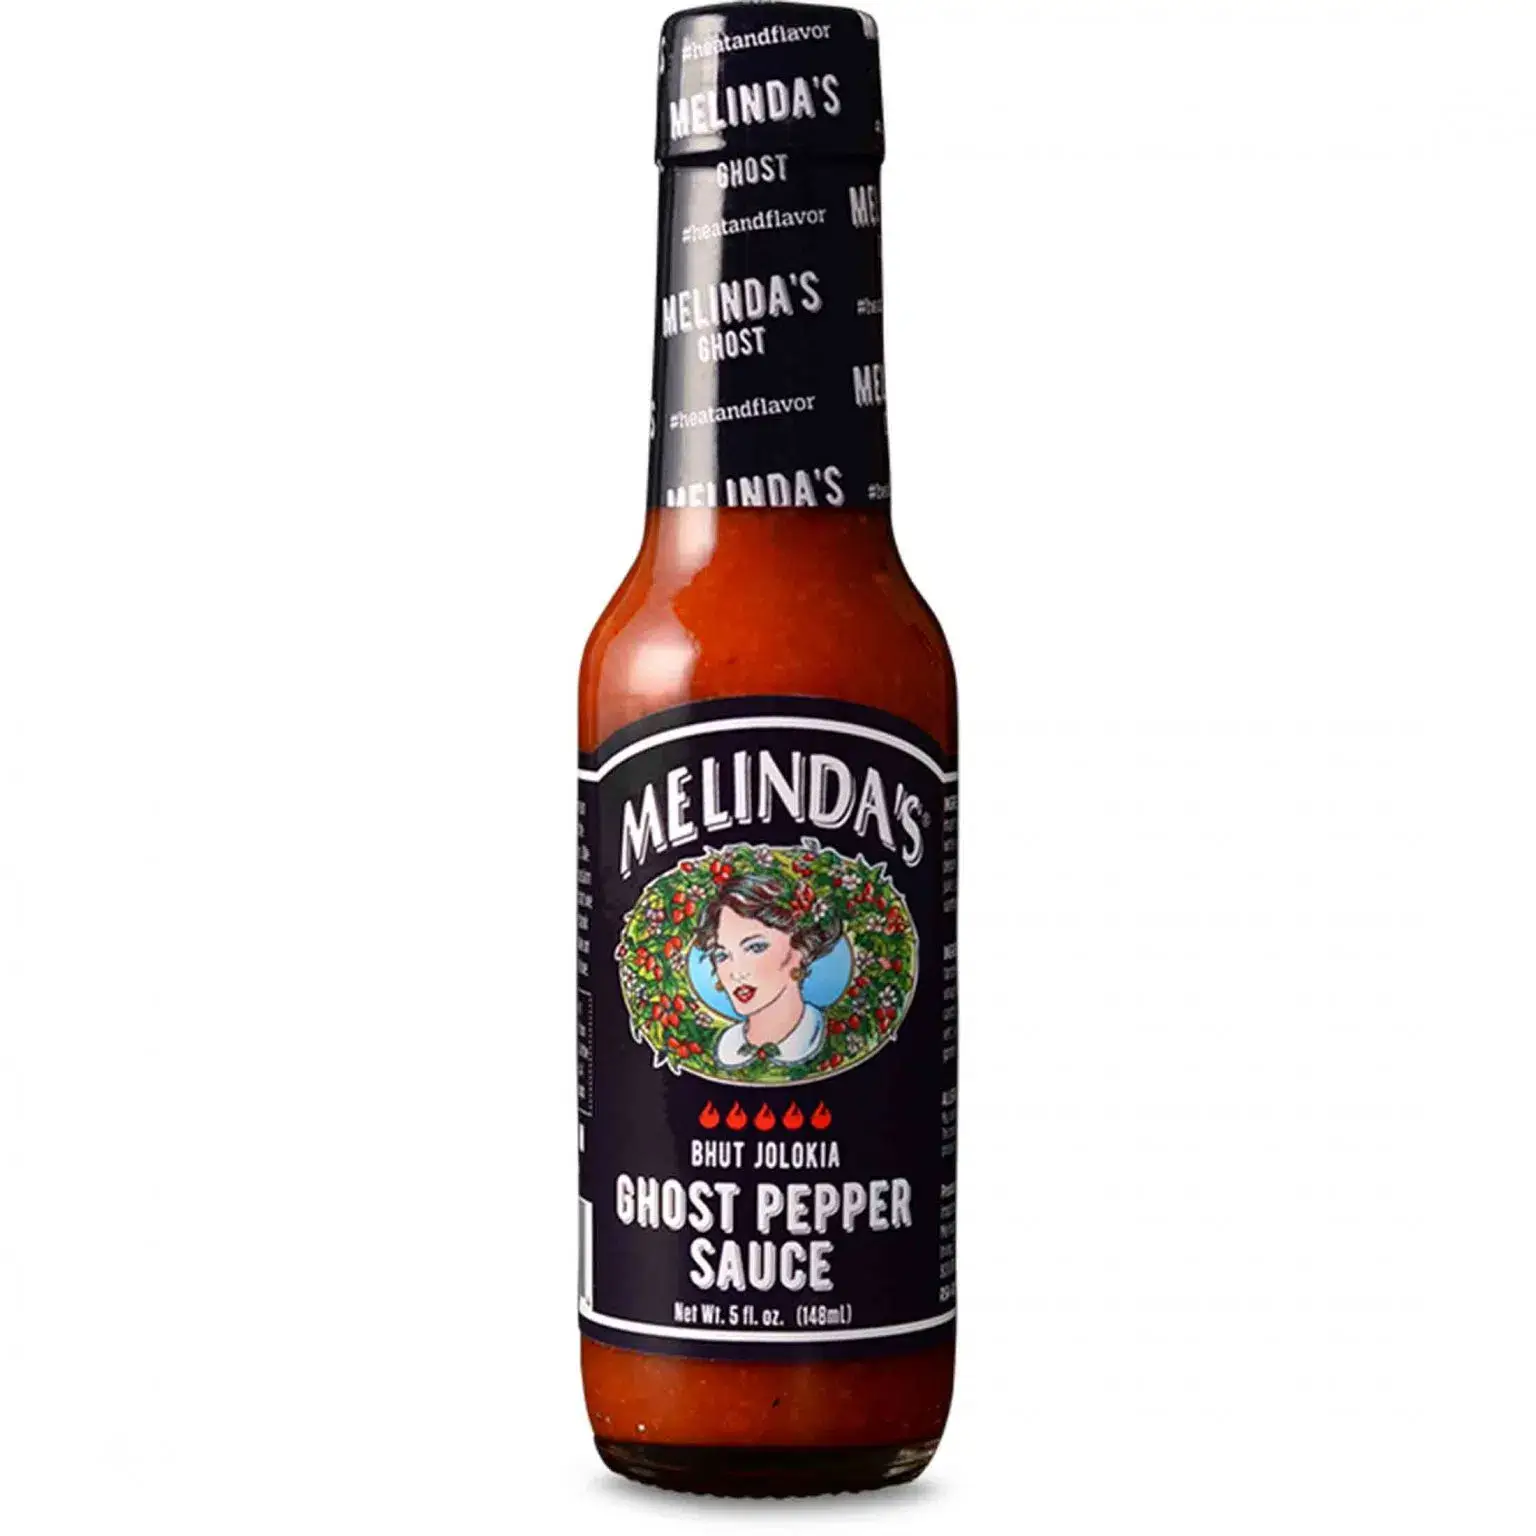 Melinda’s Ghost Pepper Sauce